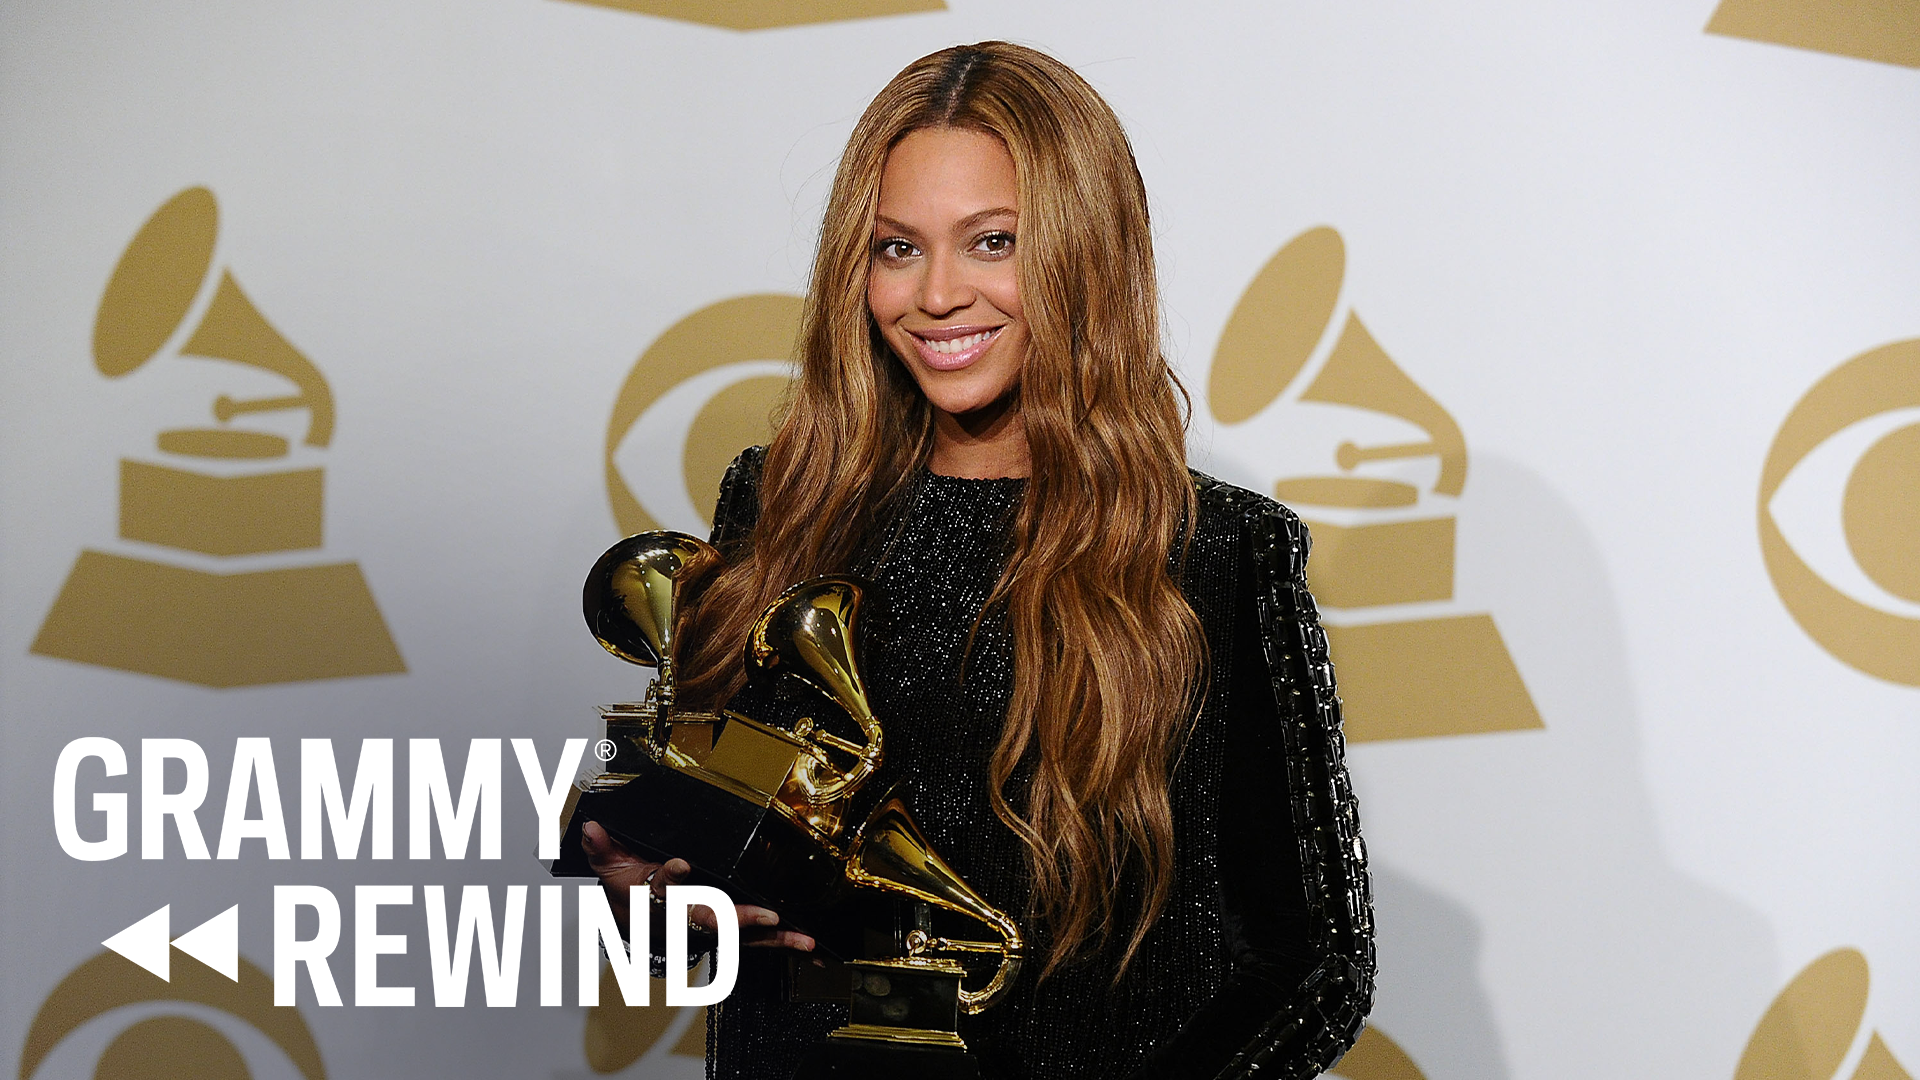 Watch Beyoncé Win A GRAMMY For "Drunk In Love"